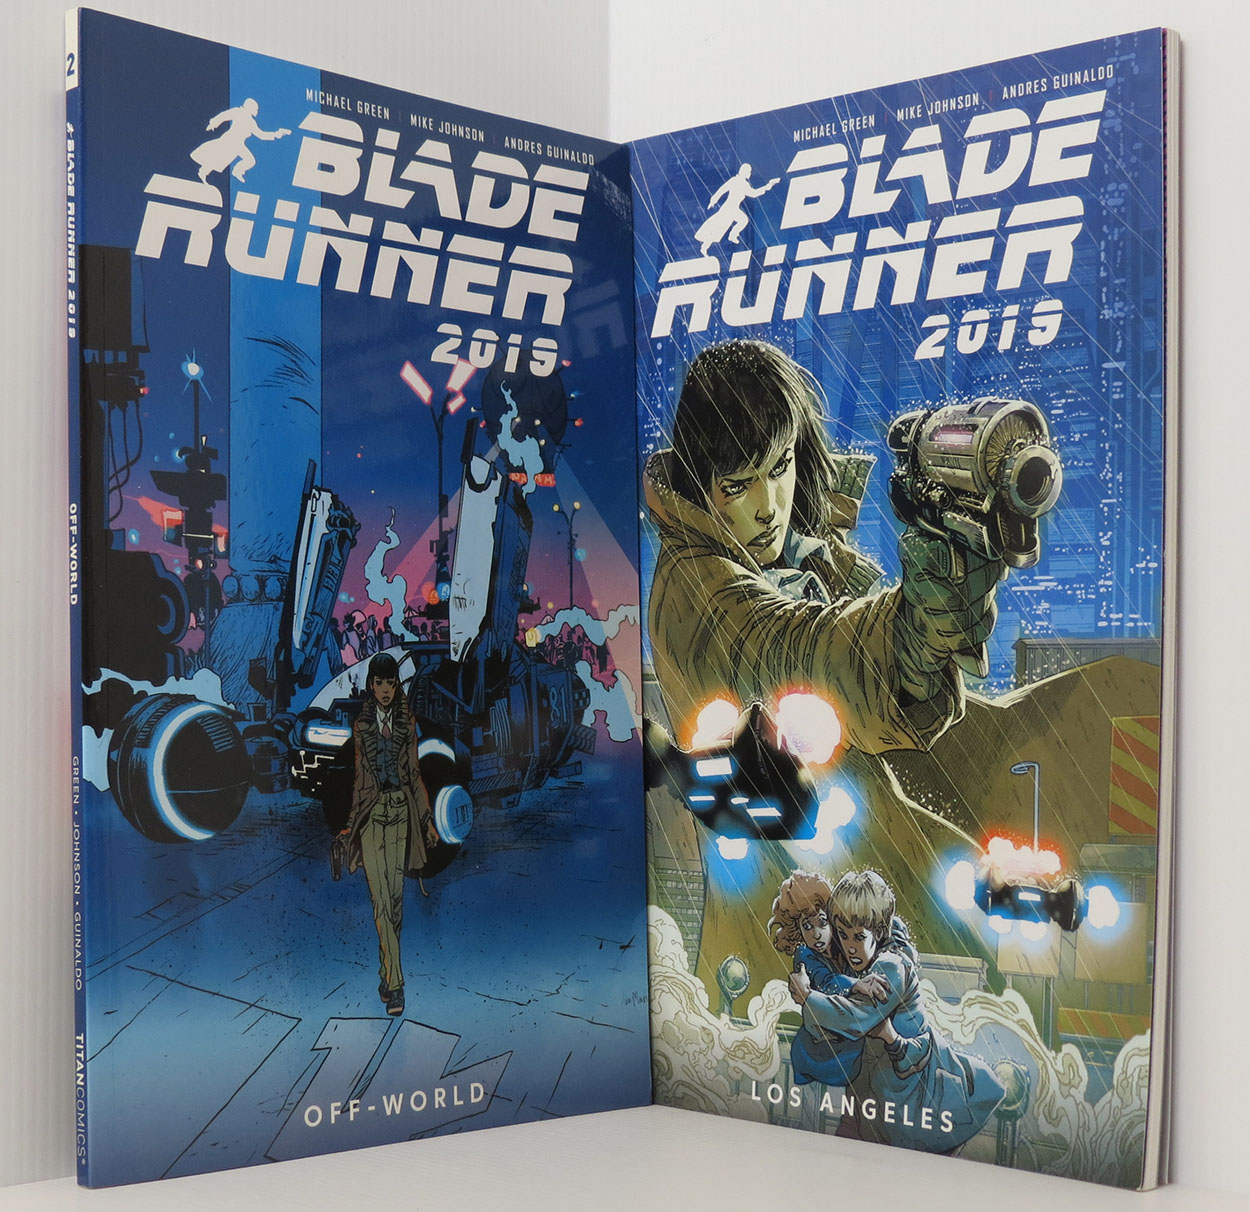 Image for Blade Runner 2019: Vol 1: Los Angeles & Blade Runner 2019 Vol 2: Off-World (2 Vols PBs)